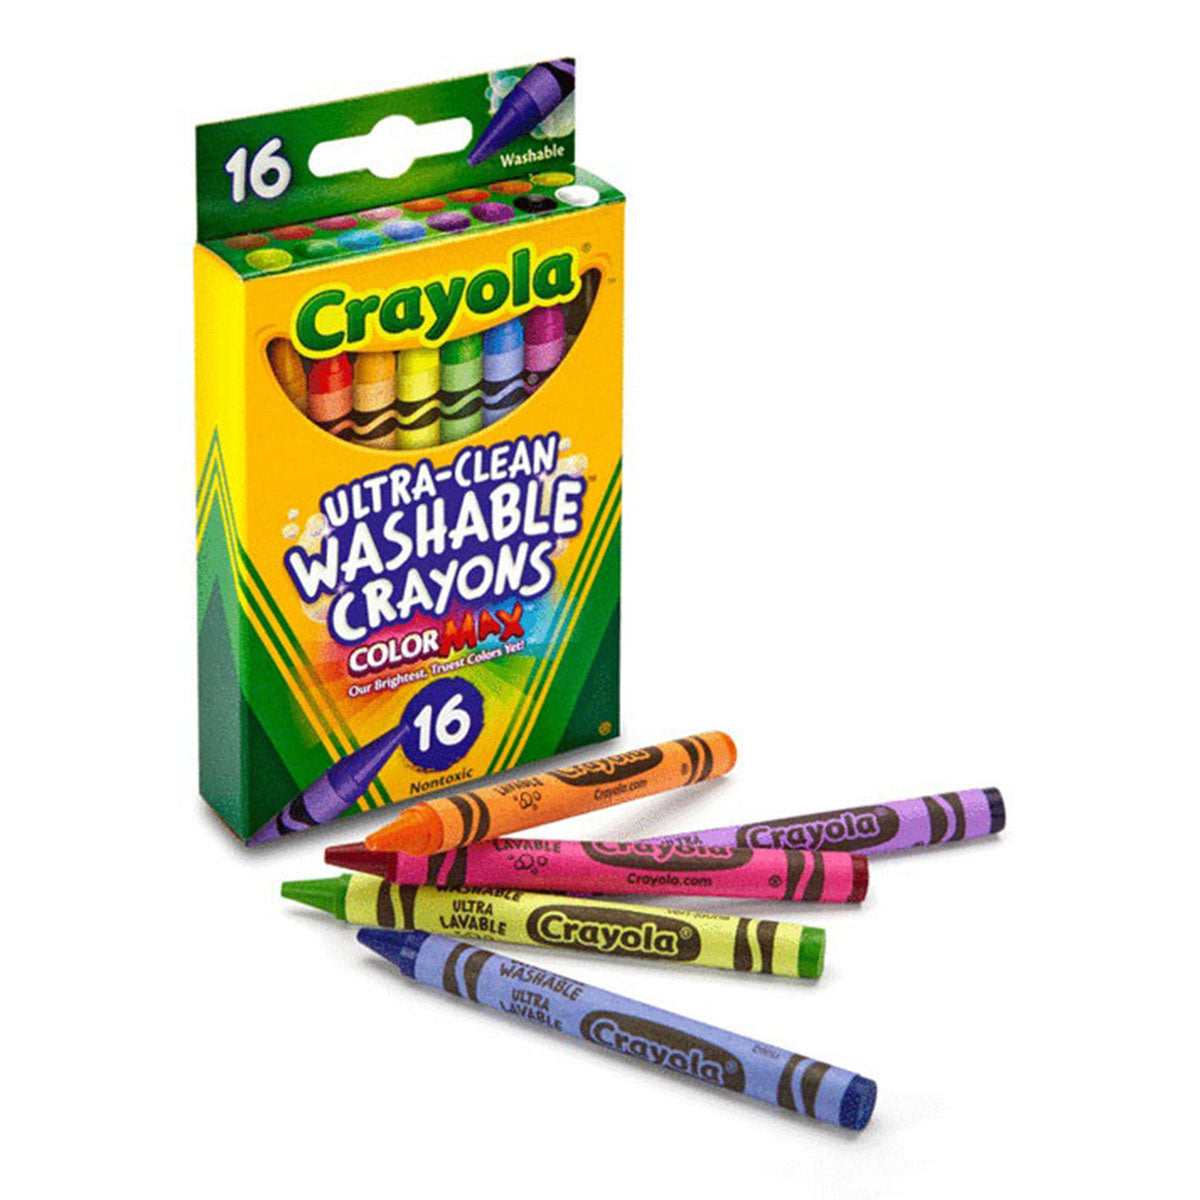 Crayola - Ultra-Clean Washable Crayons 16 Count